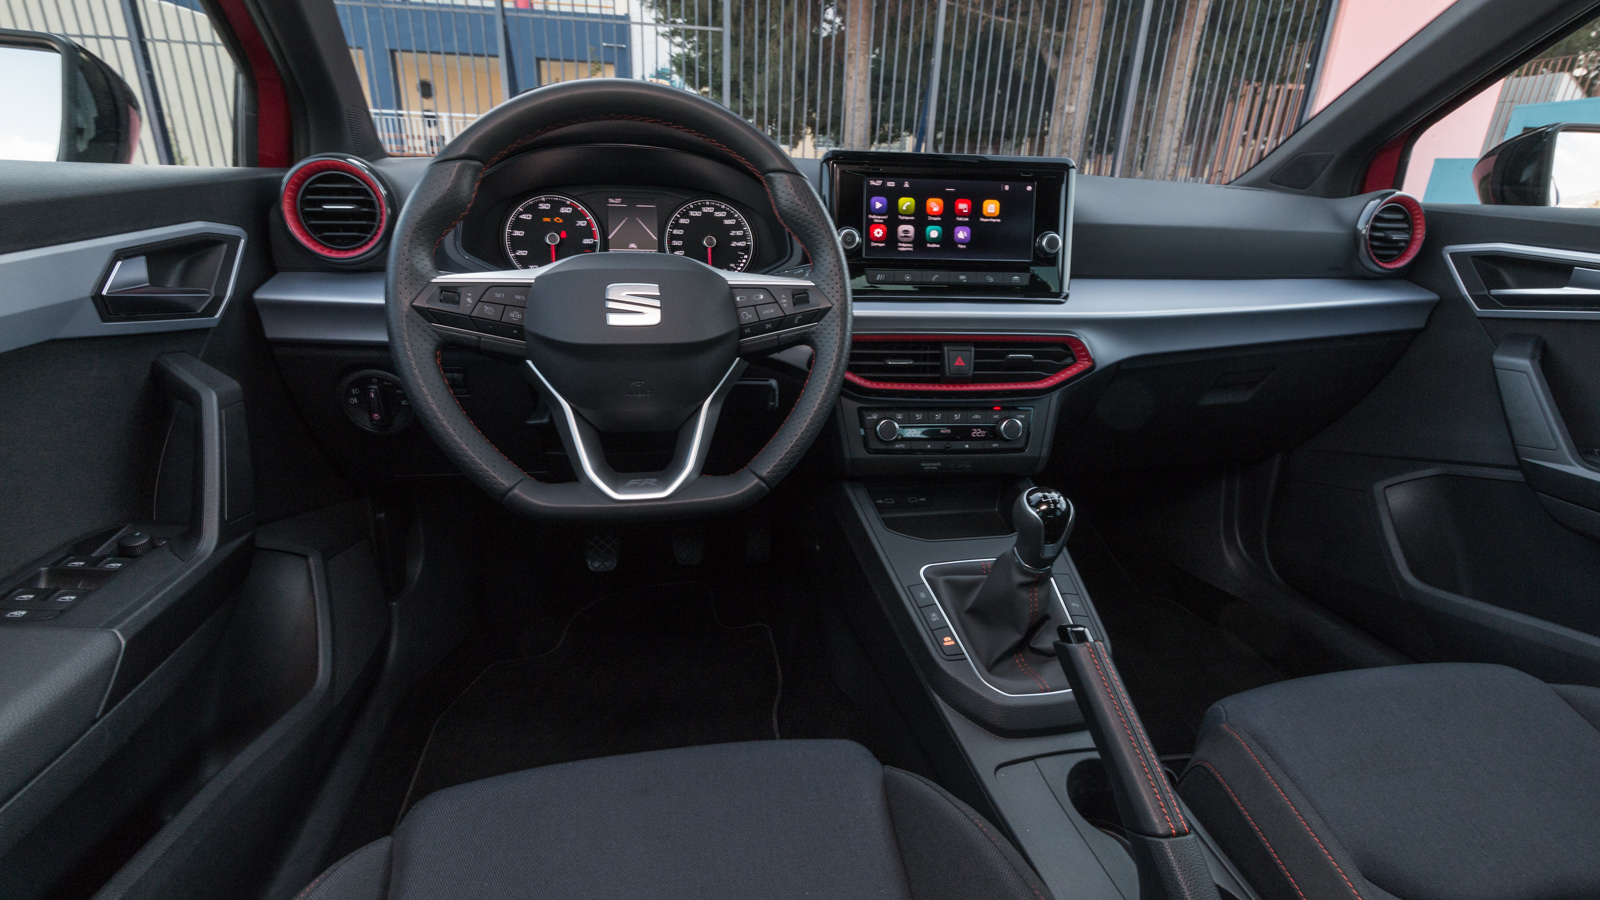 Hyundai I20 VS Seat Ibiza 110ps. Ποιο ξεχωρίζει σε εξοπλισμό ασφαλείας και άνεσης;